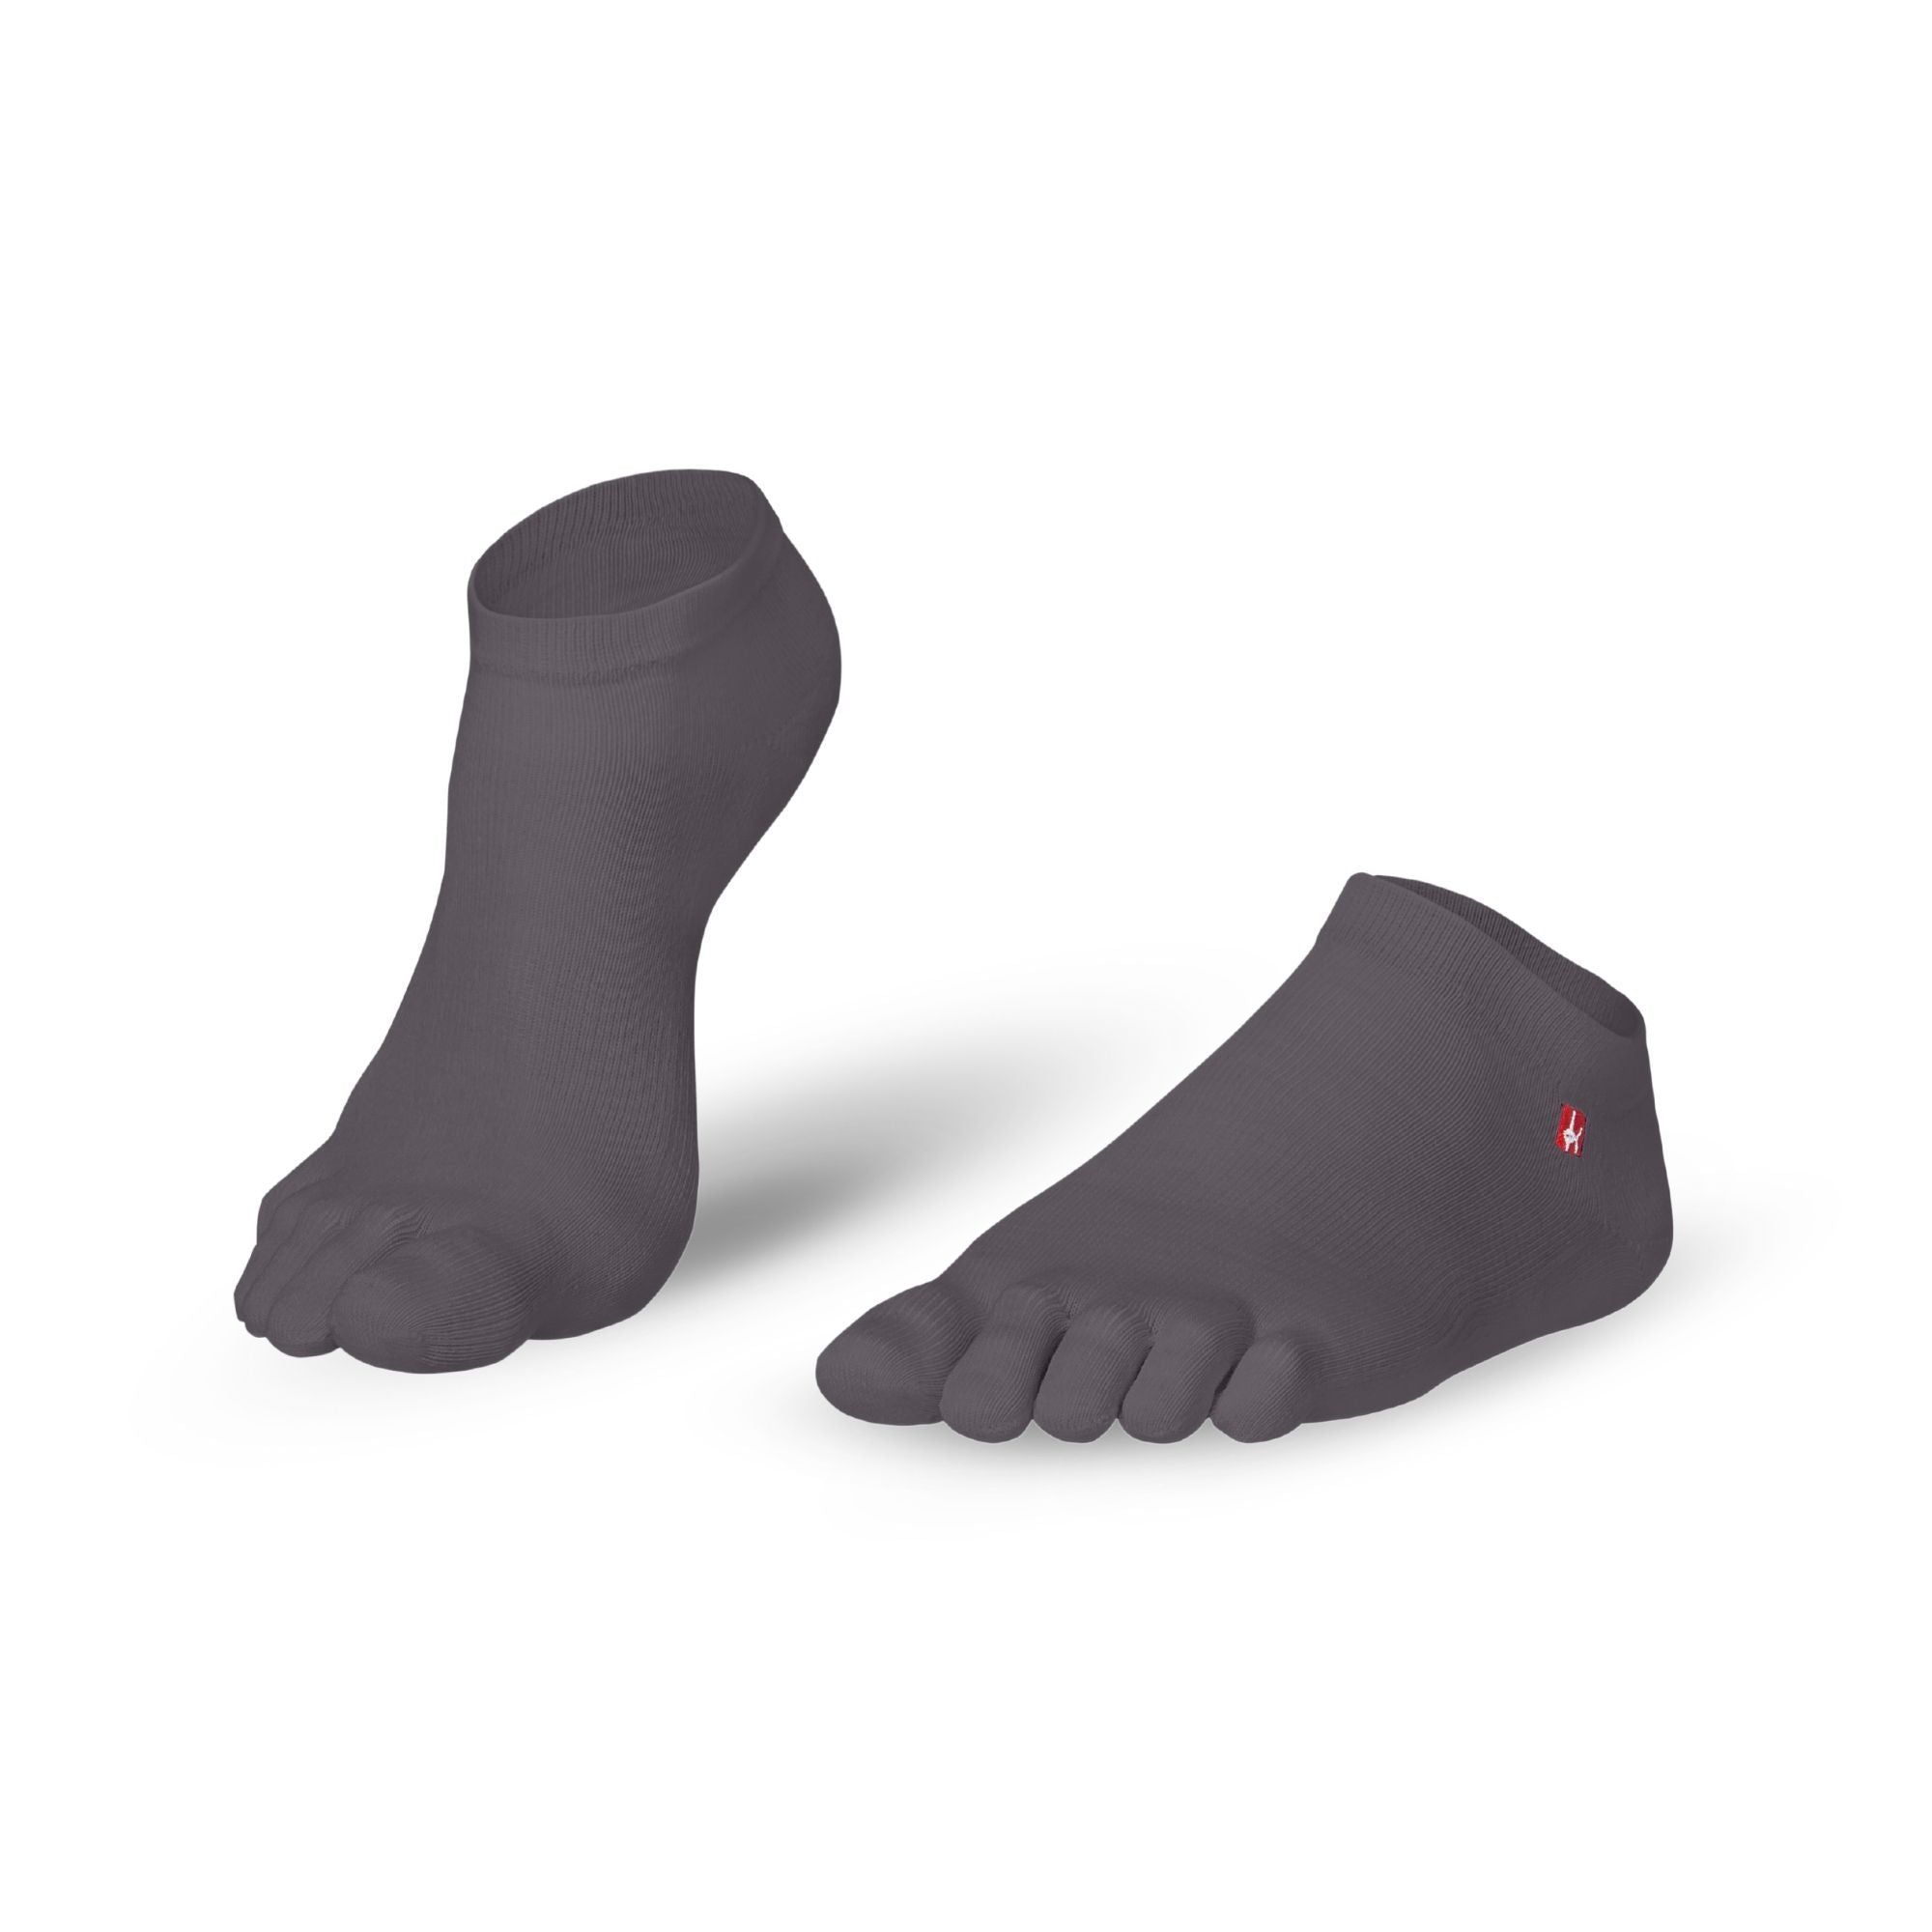 Toe socks Coolmax Sneaker from Knitido Track & Trail ultralite fresh in light gray